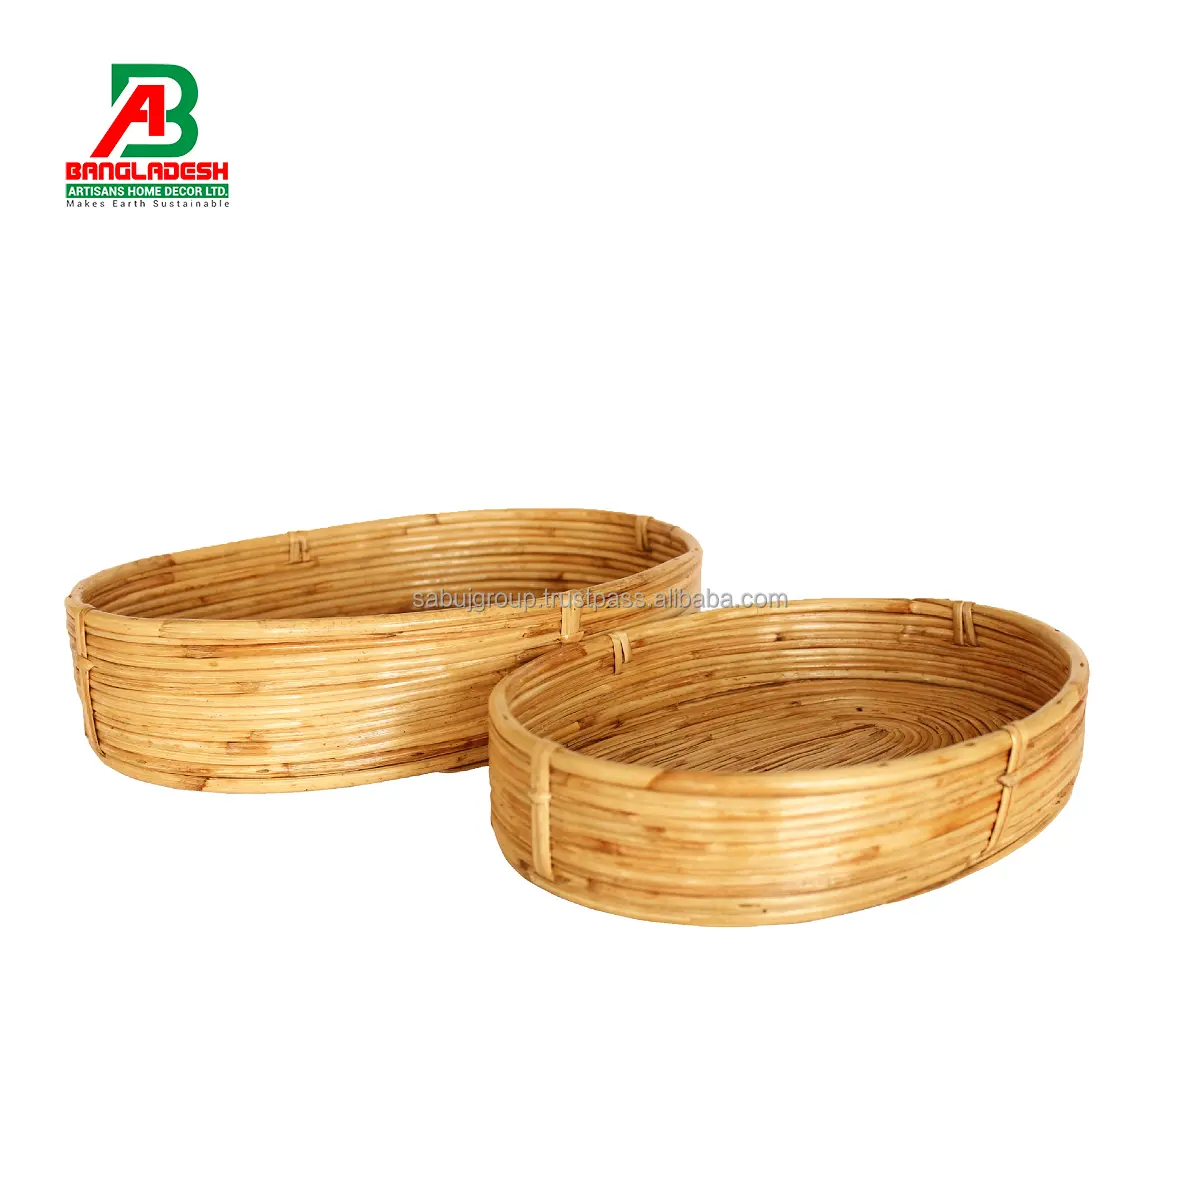 Rattan bamboo 2 Pcs Oval Tray Set Kitchen Box Basket For Storage made in Bangladesh